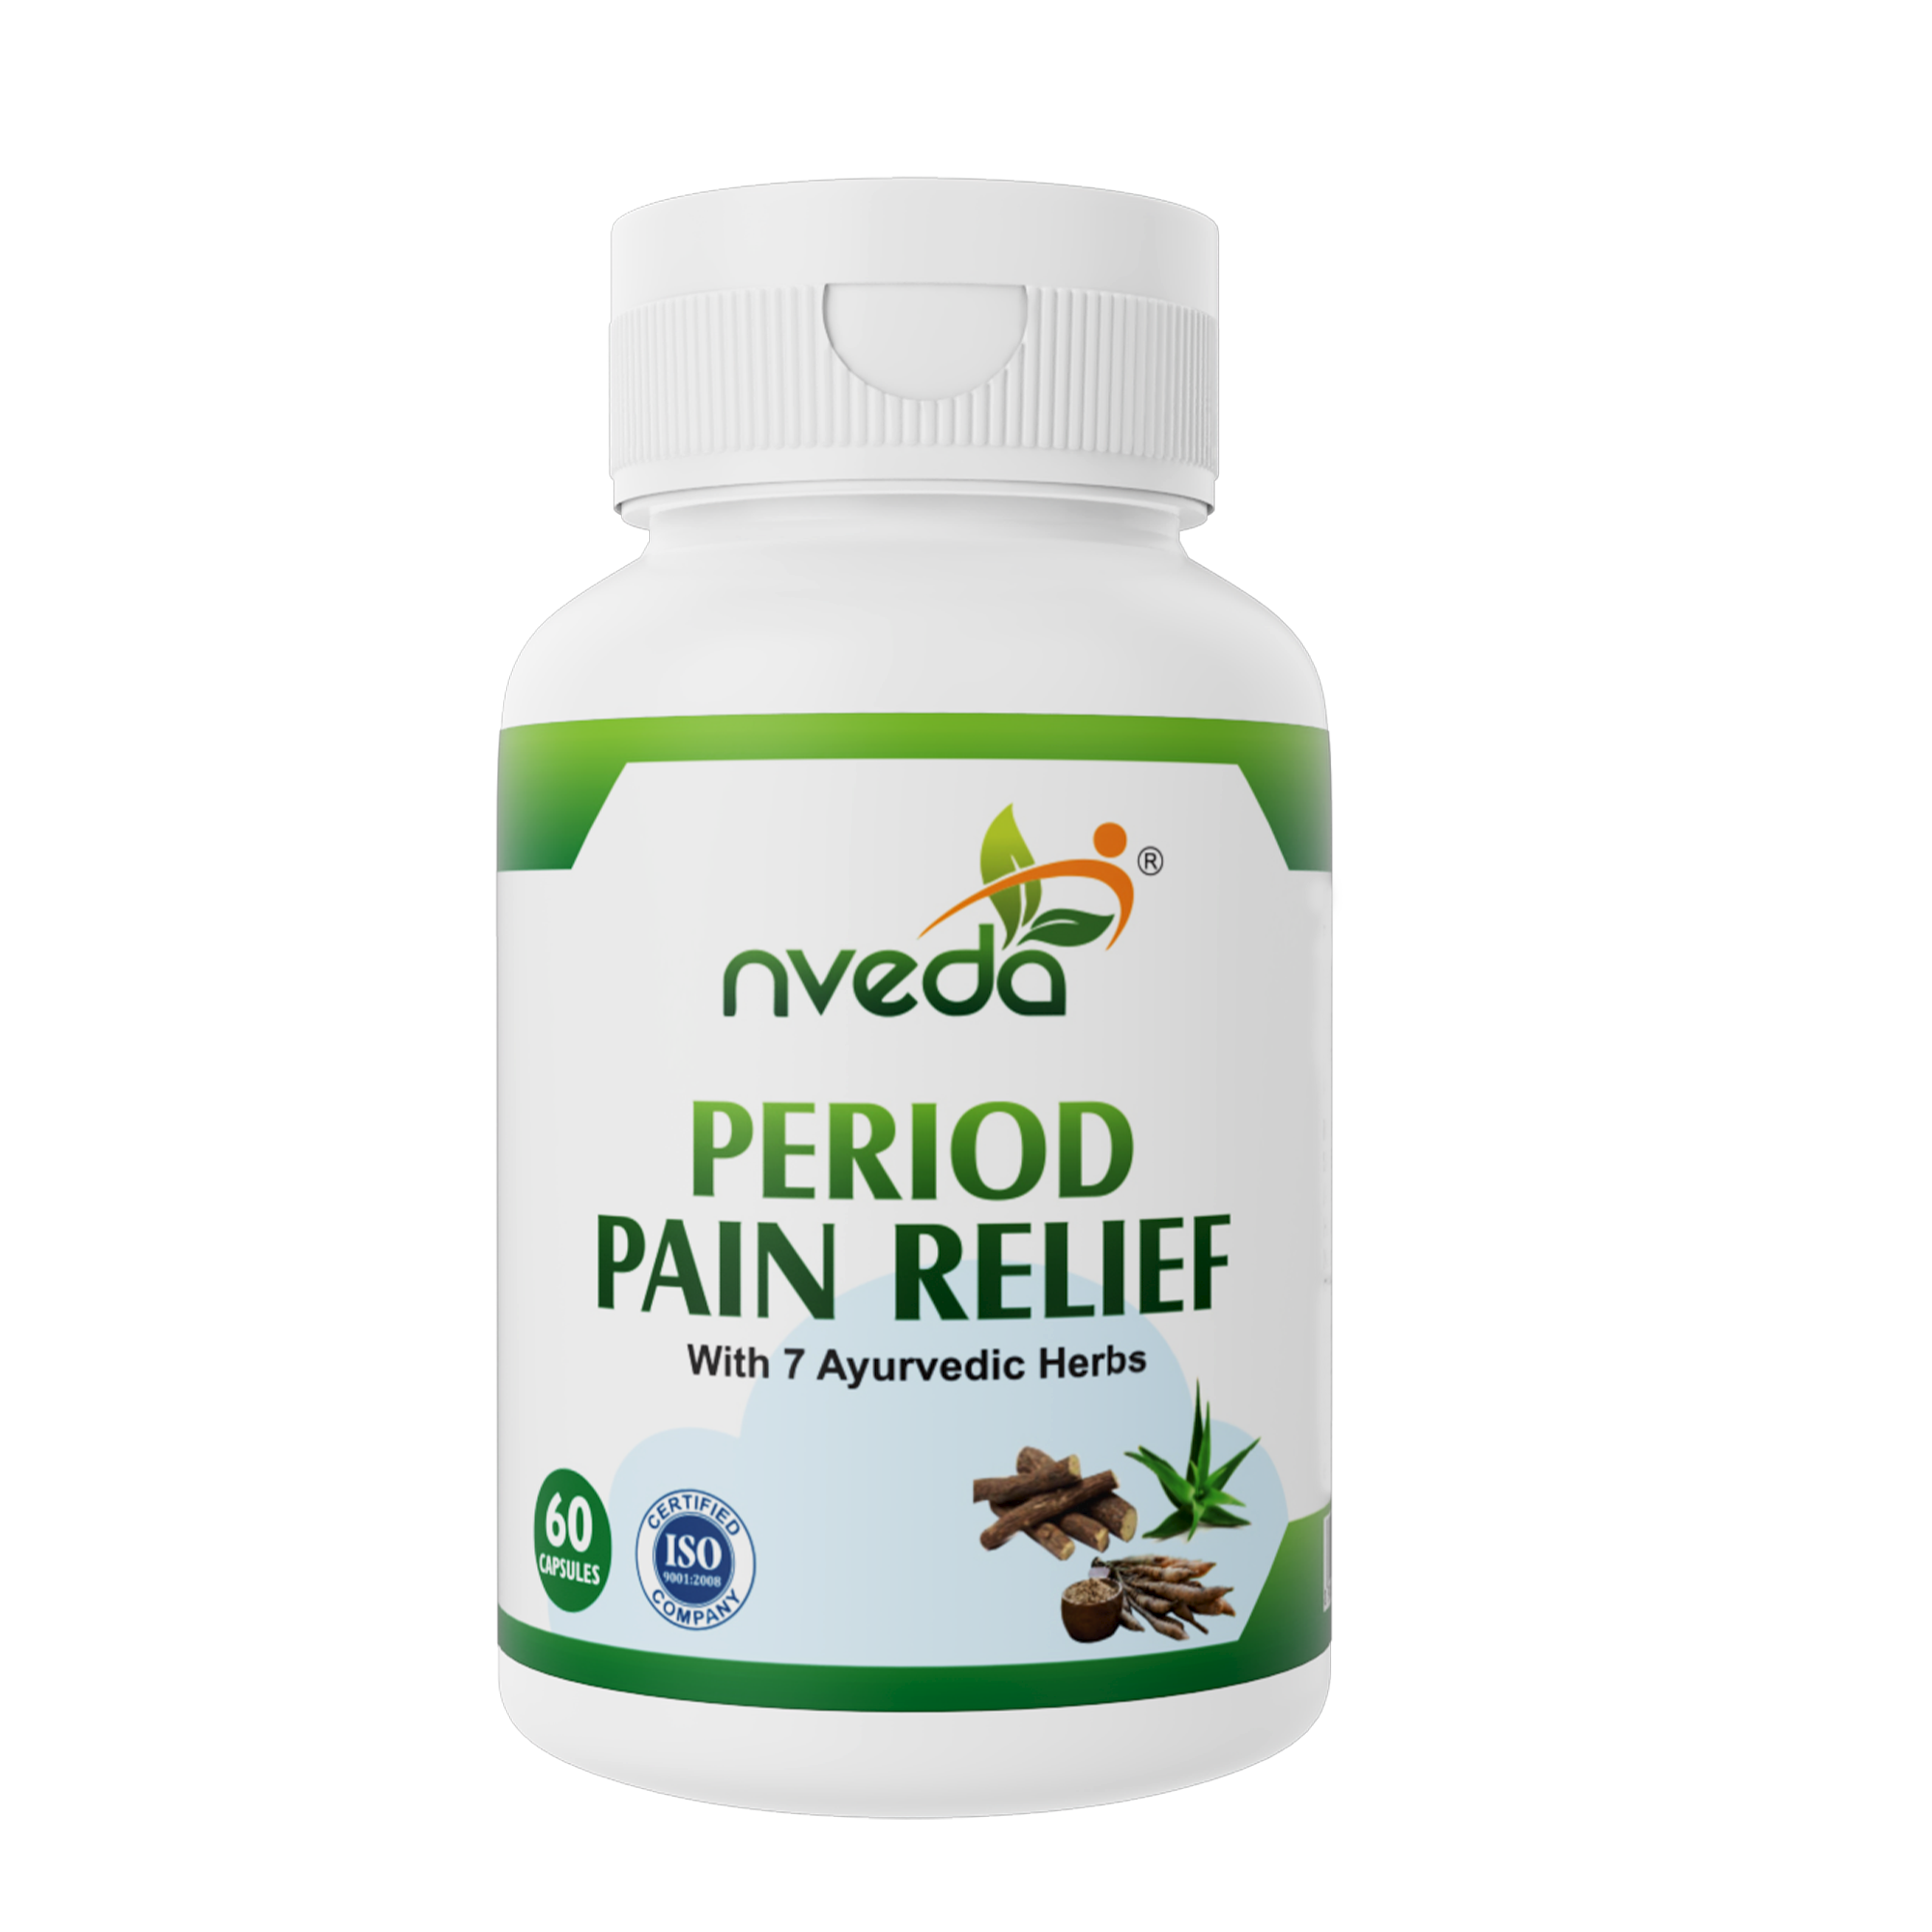 Nveda Period Pain Relief - 60 capsules